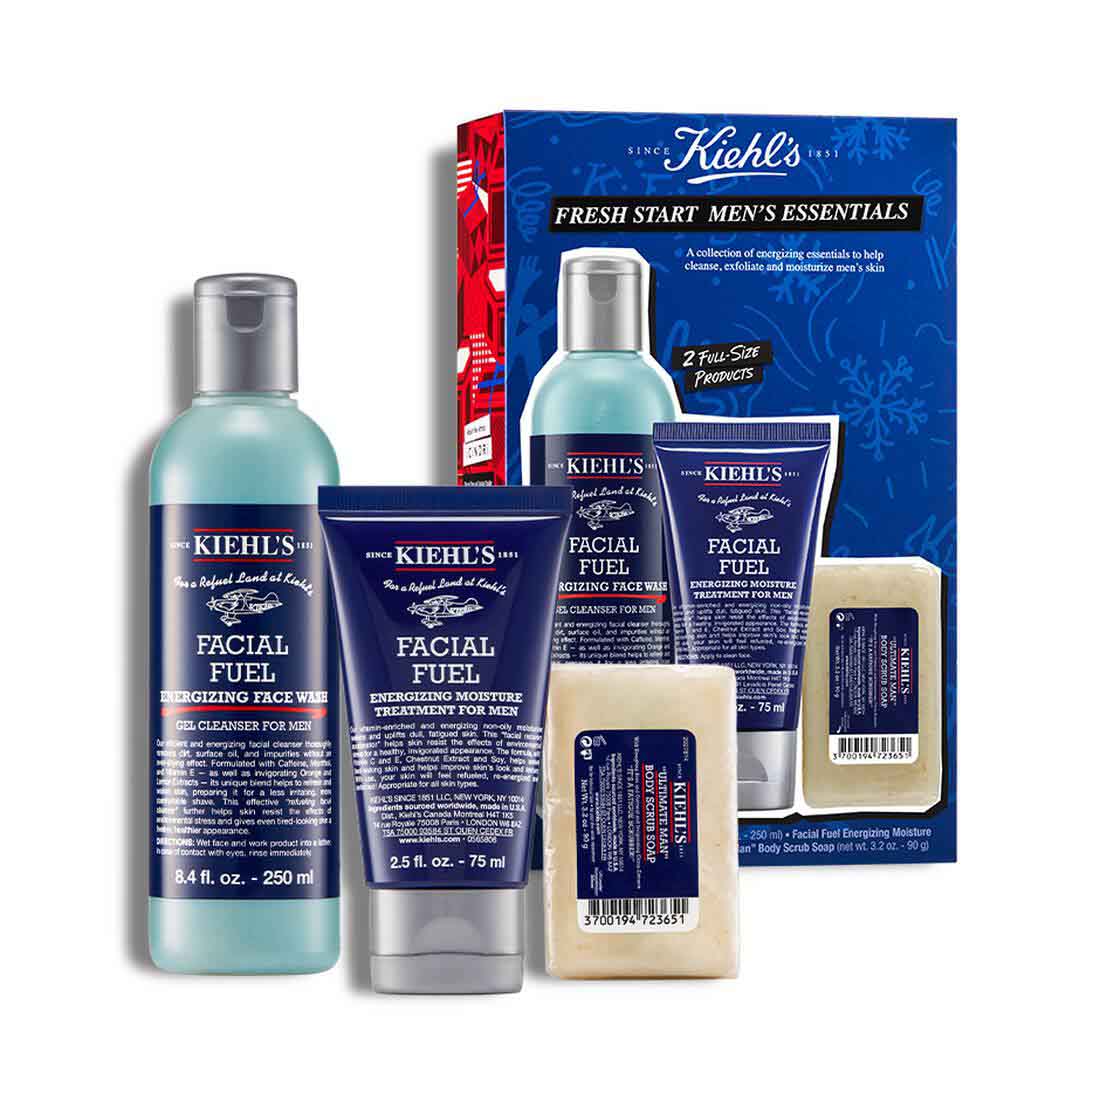 Fresh Start Men's Essentials Gift Set with moisturizer, body scrub soap and face wash